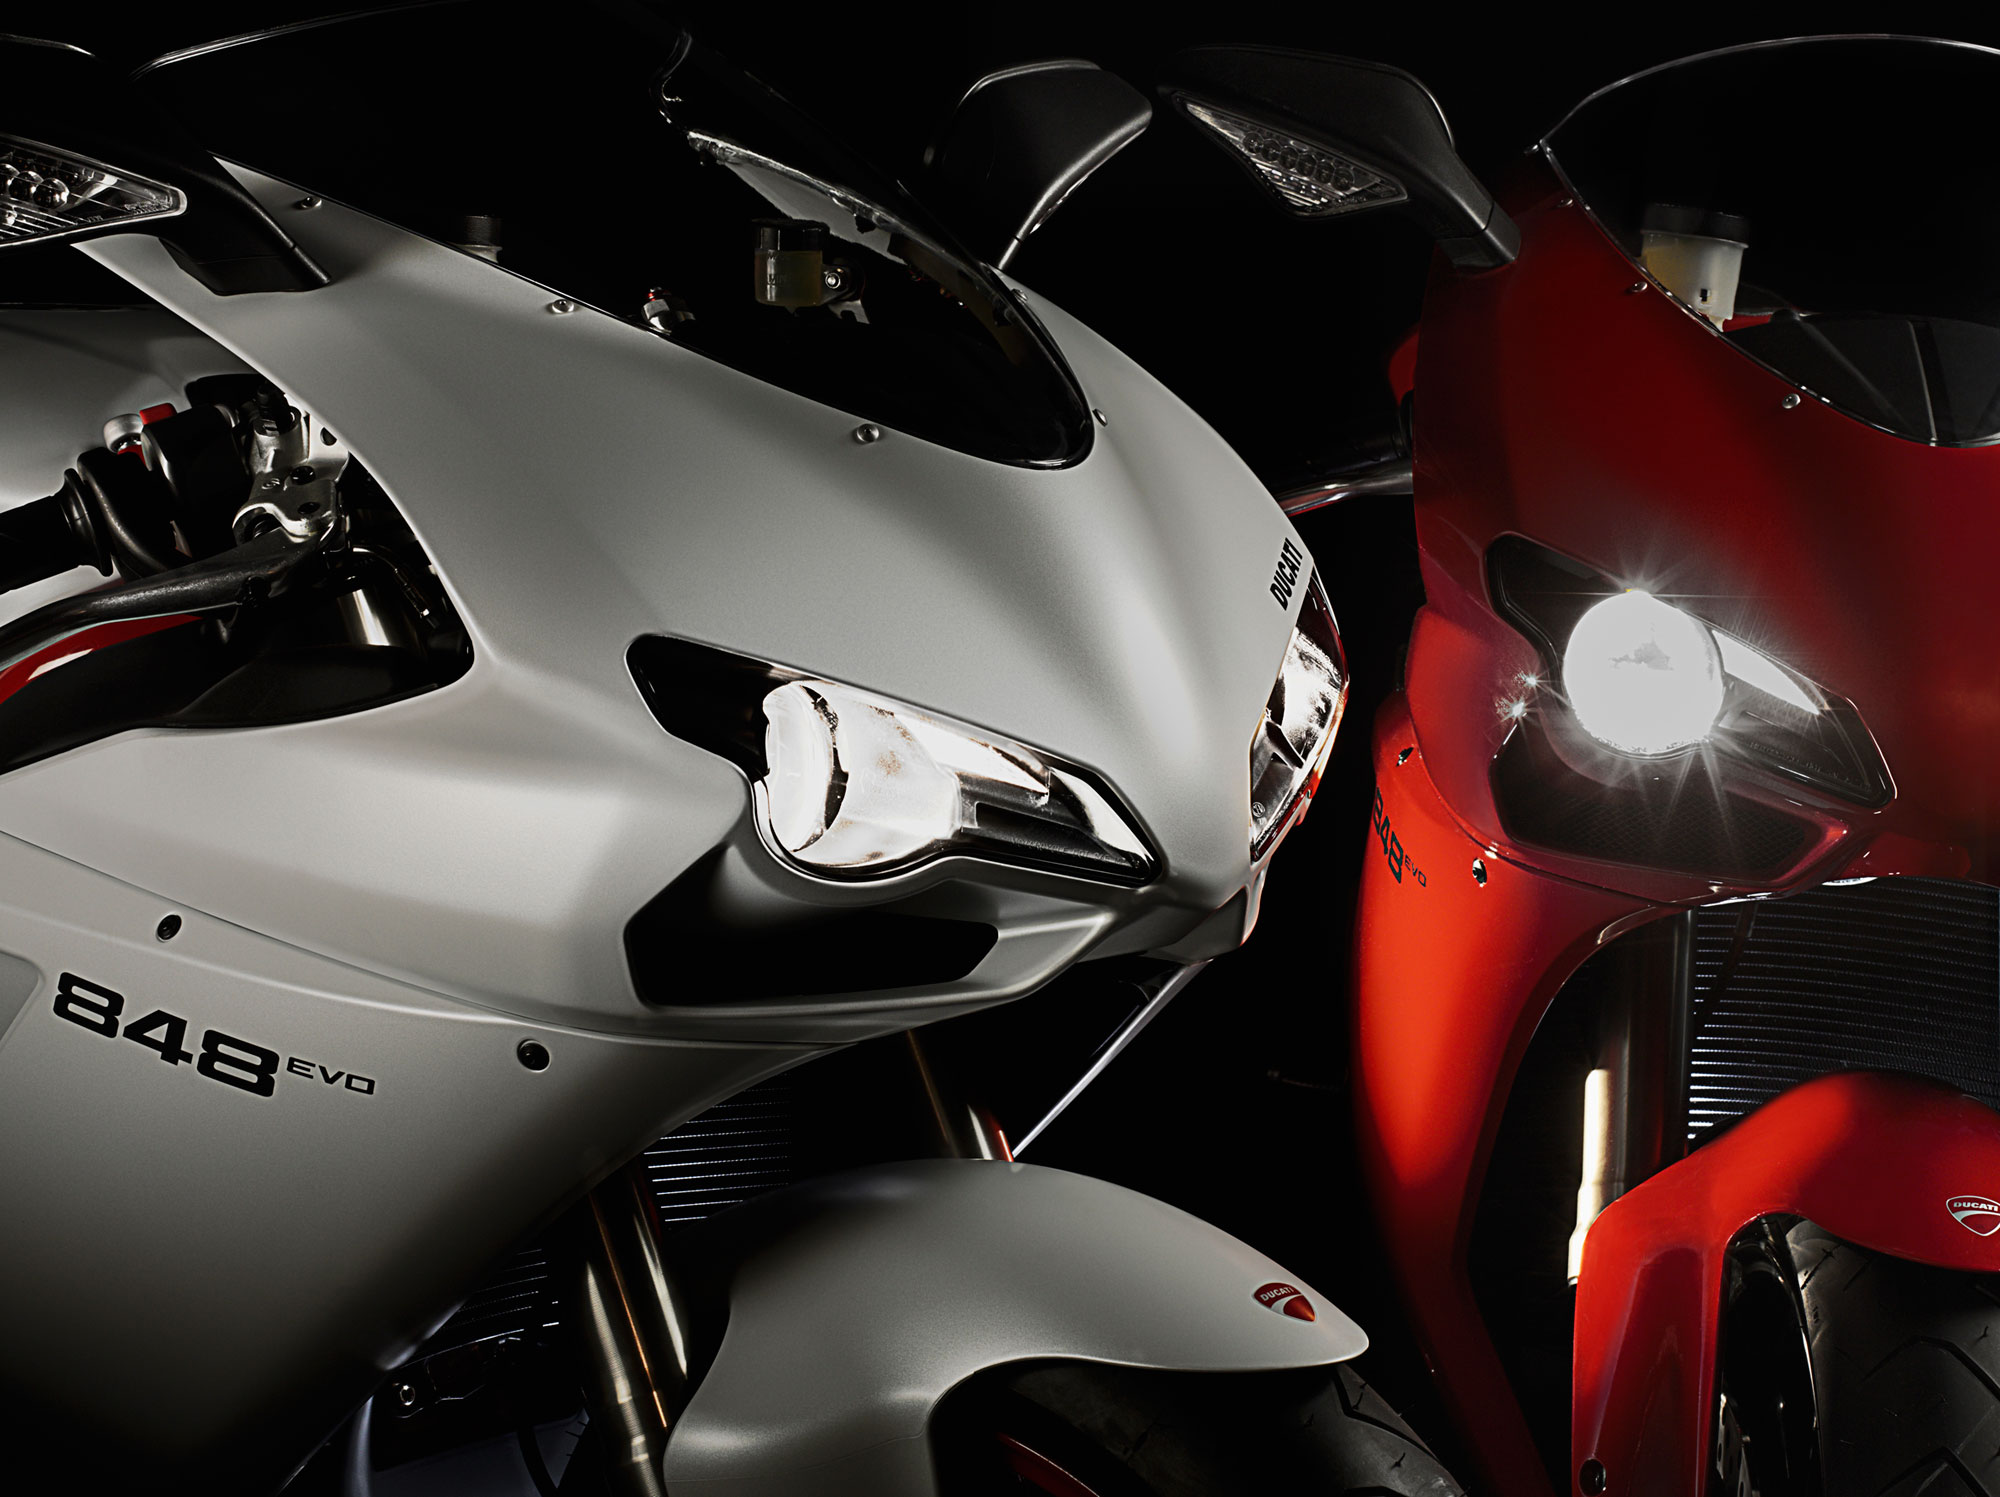 2013, Ducati, Superbike, 848, Evo Wallpaper